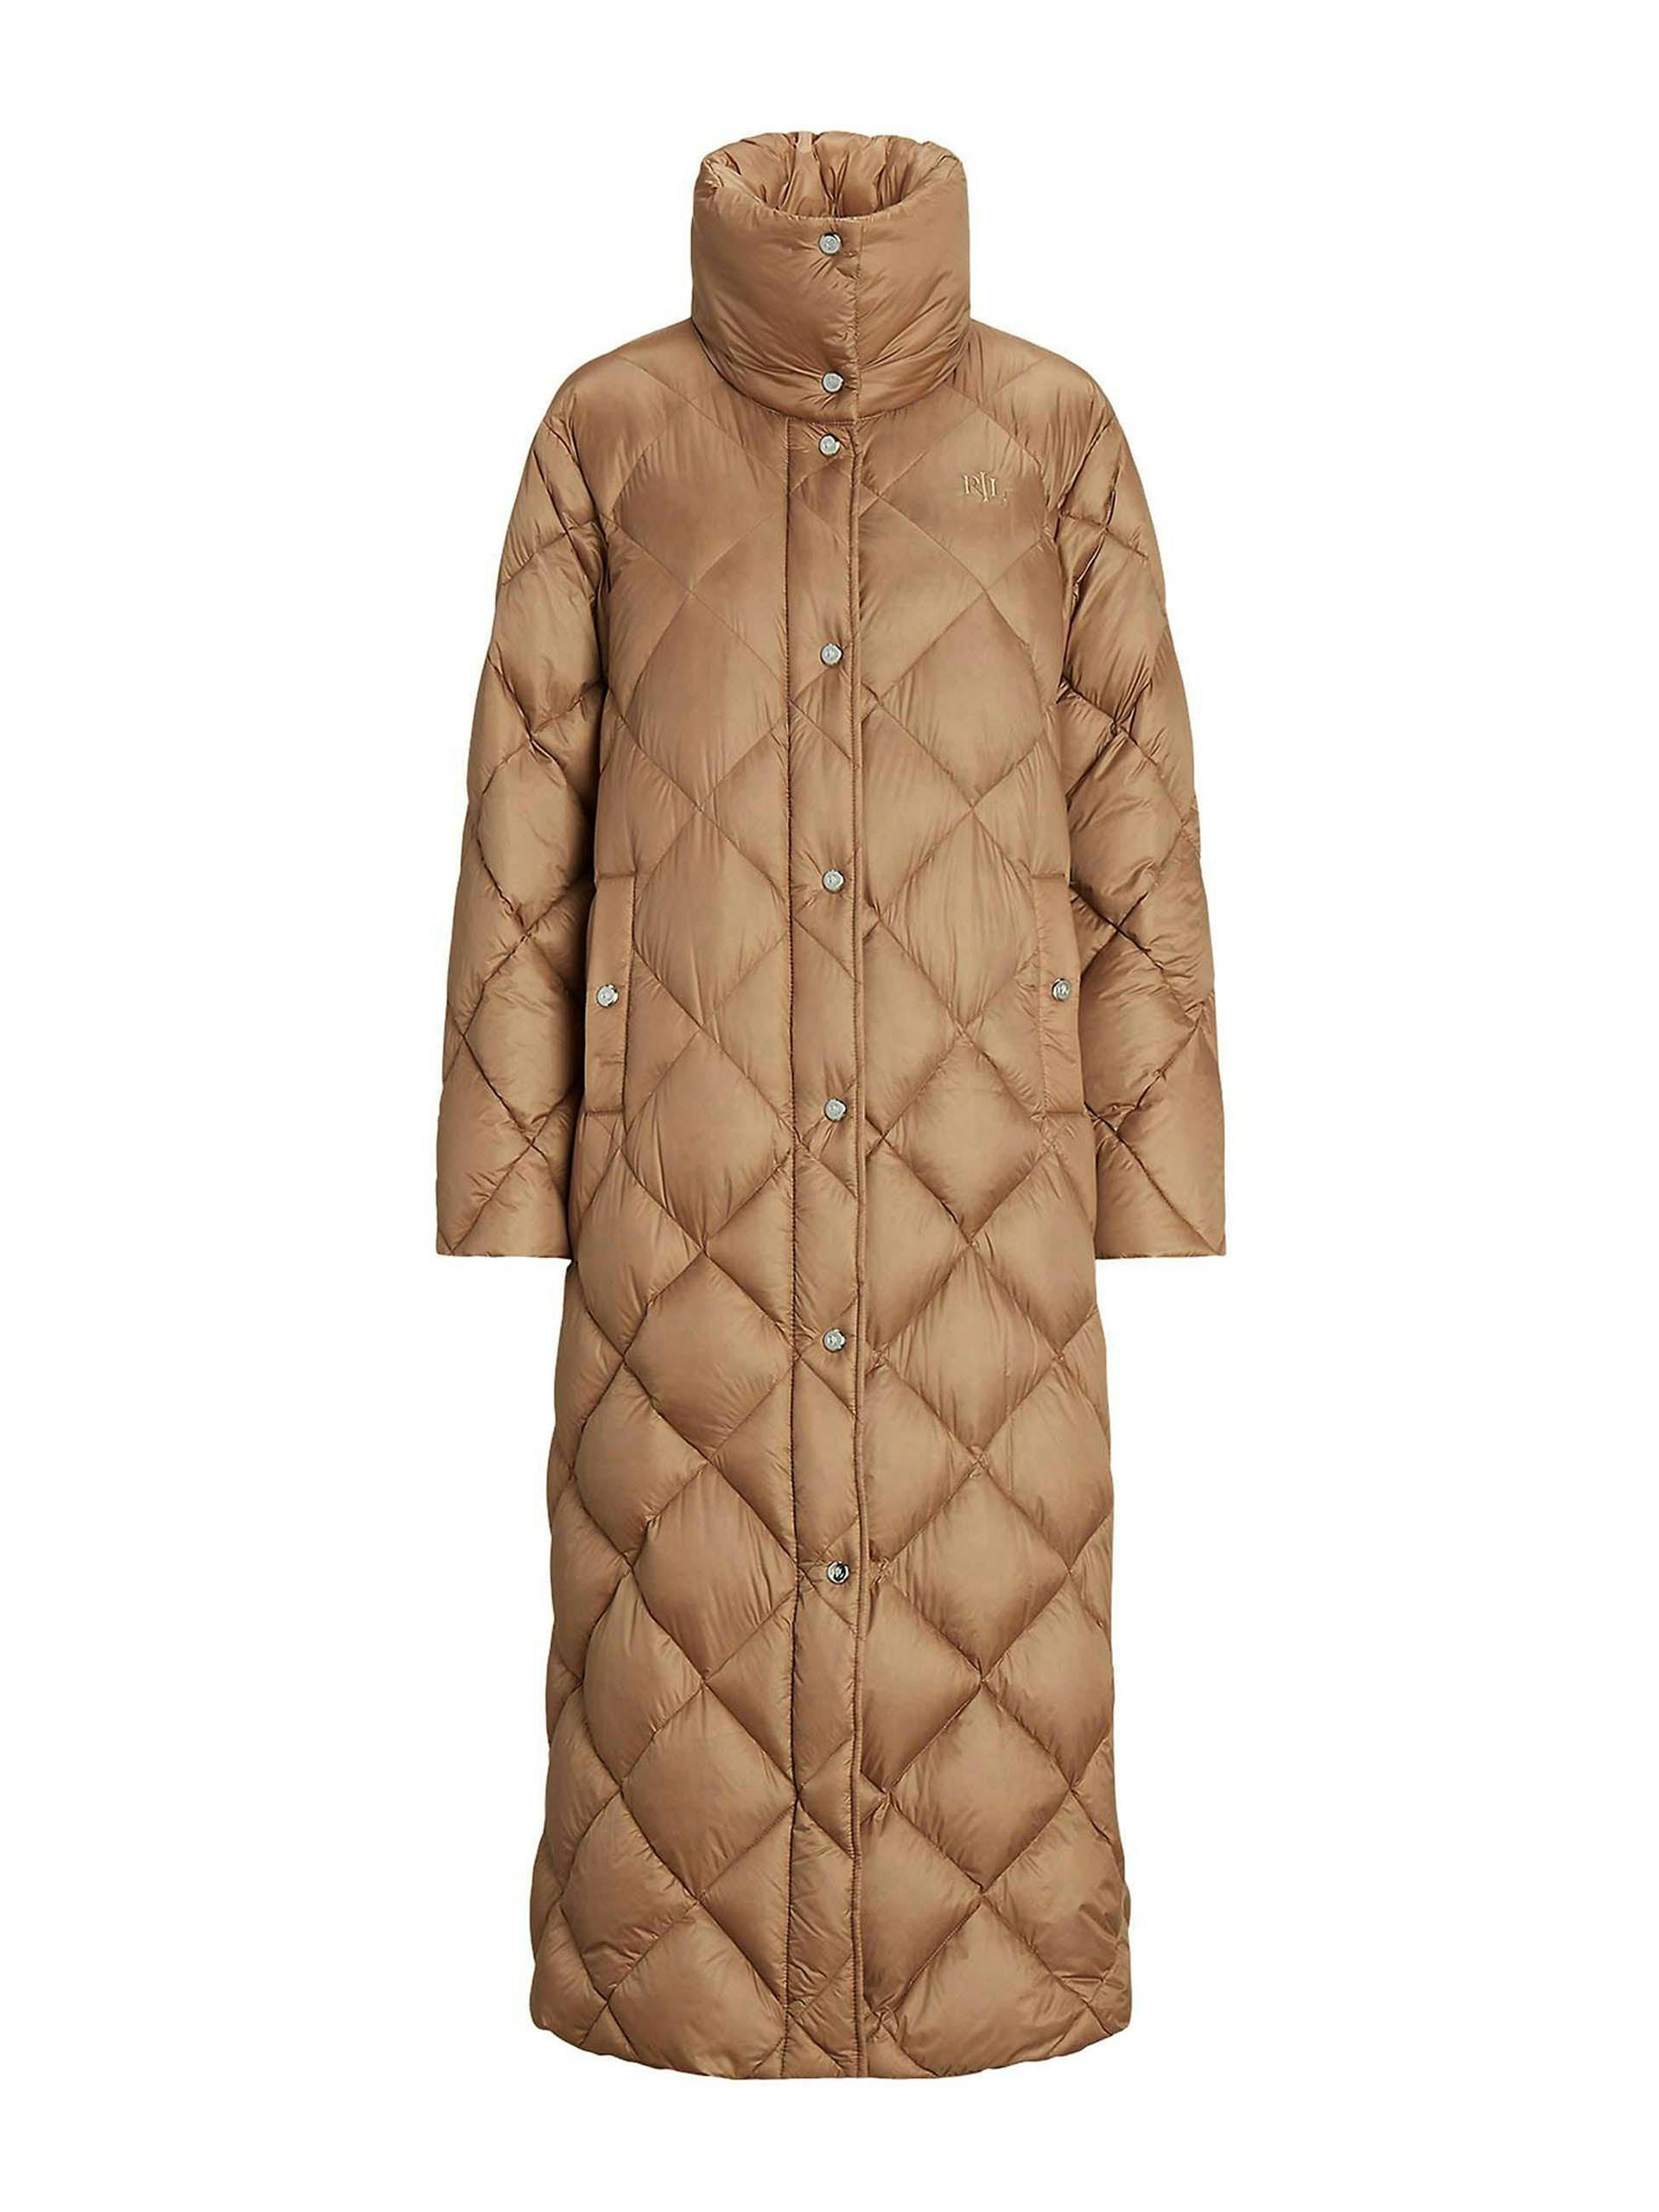 Maxi coat in classic camel